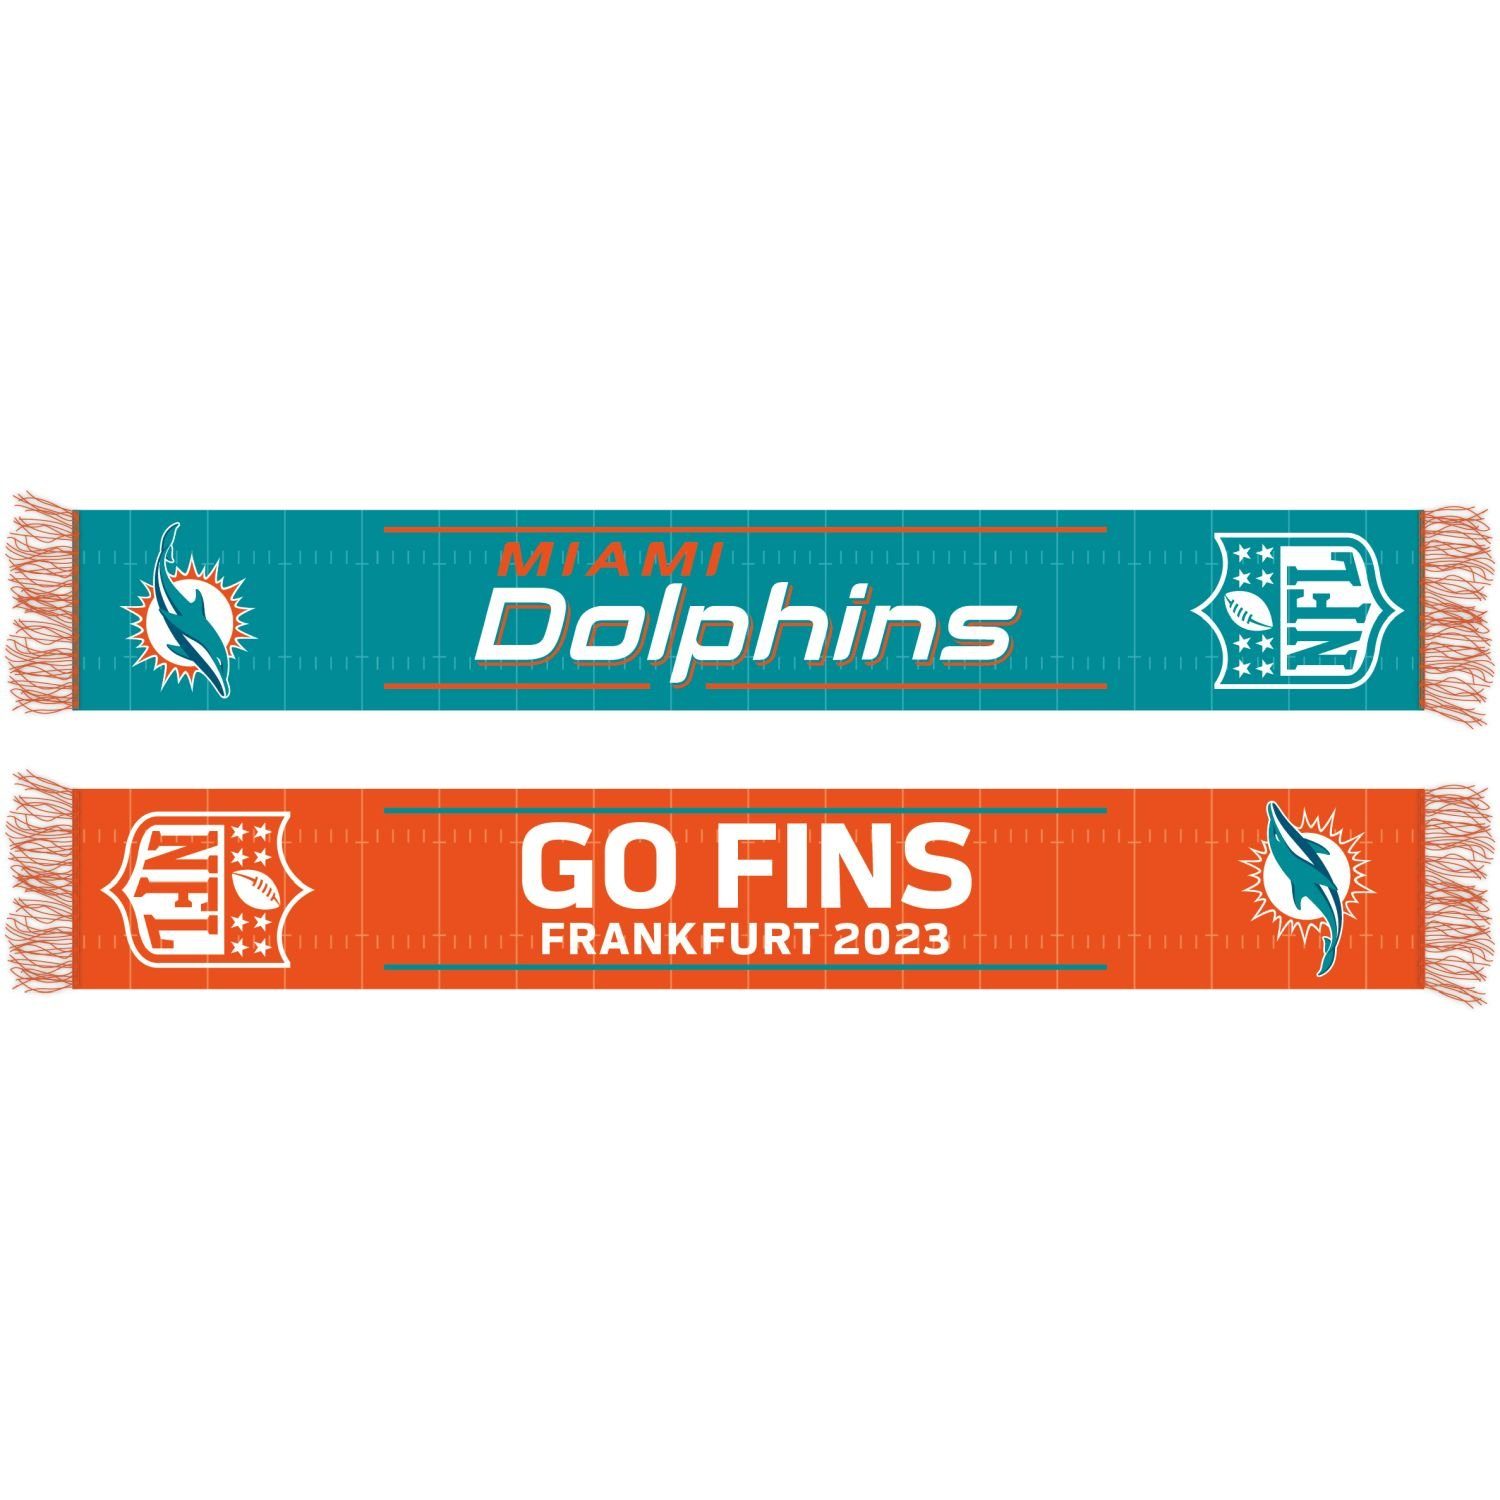 Frankfurt Miami Game Multifunktionstuch FINS GO 2023 NFL Dolphins Branding Great